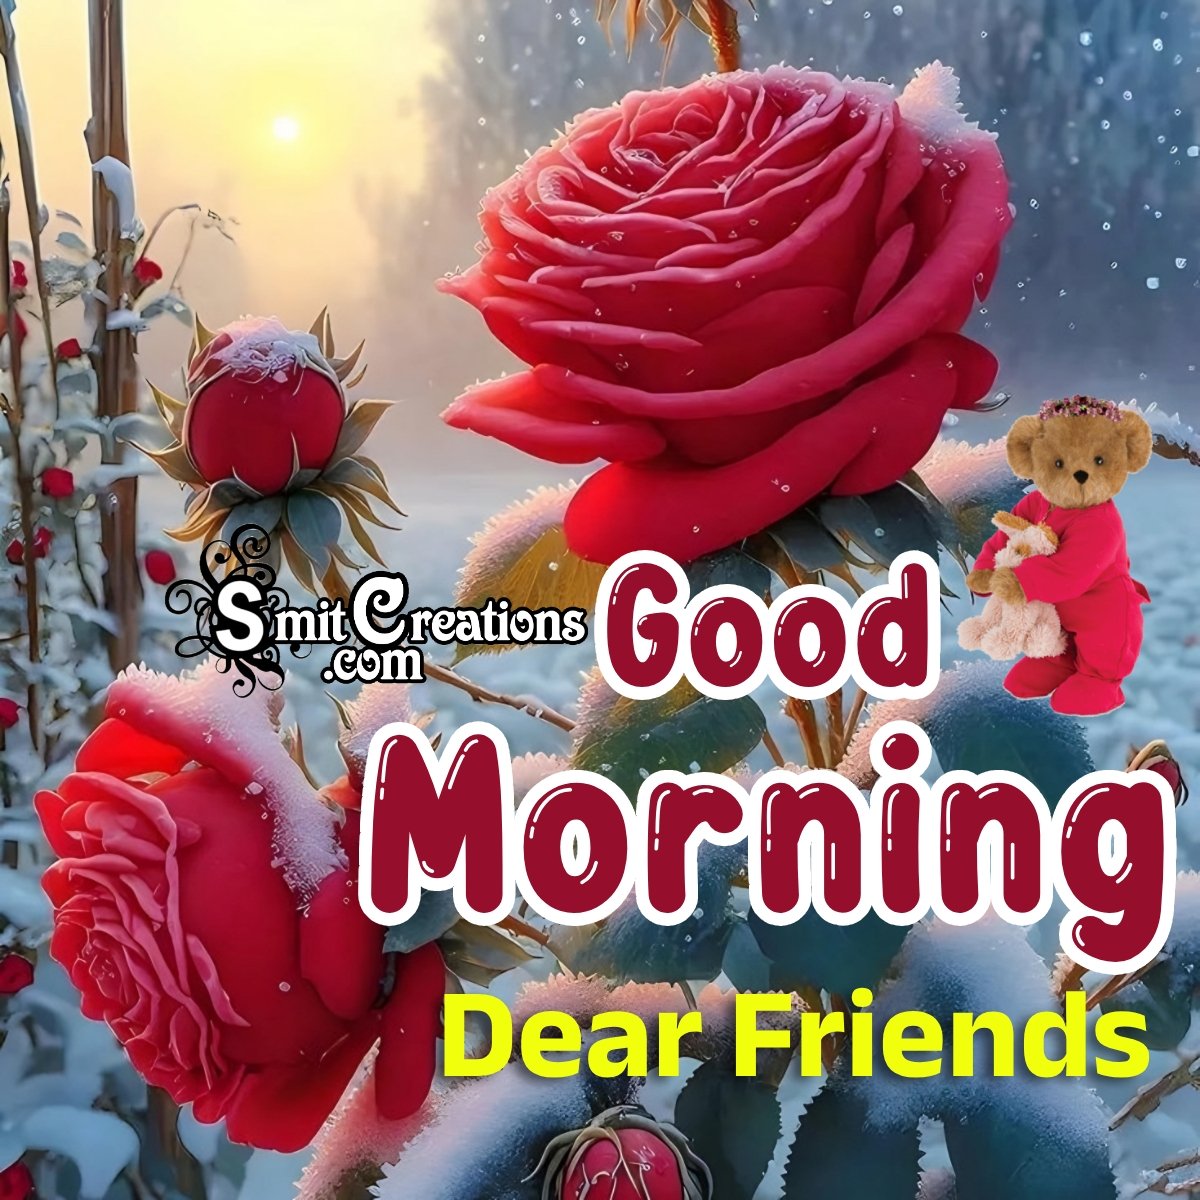 Good Morning Dear Friends